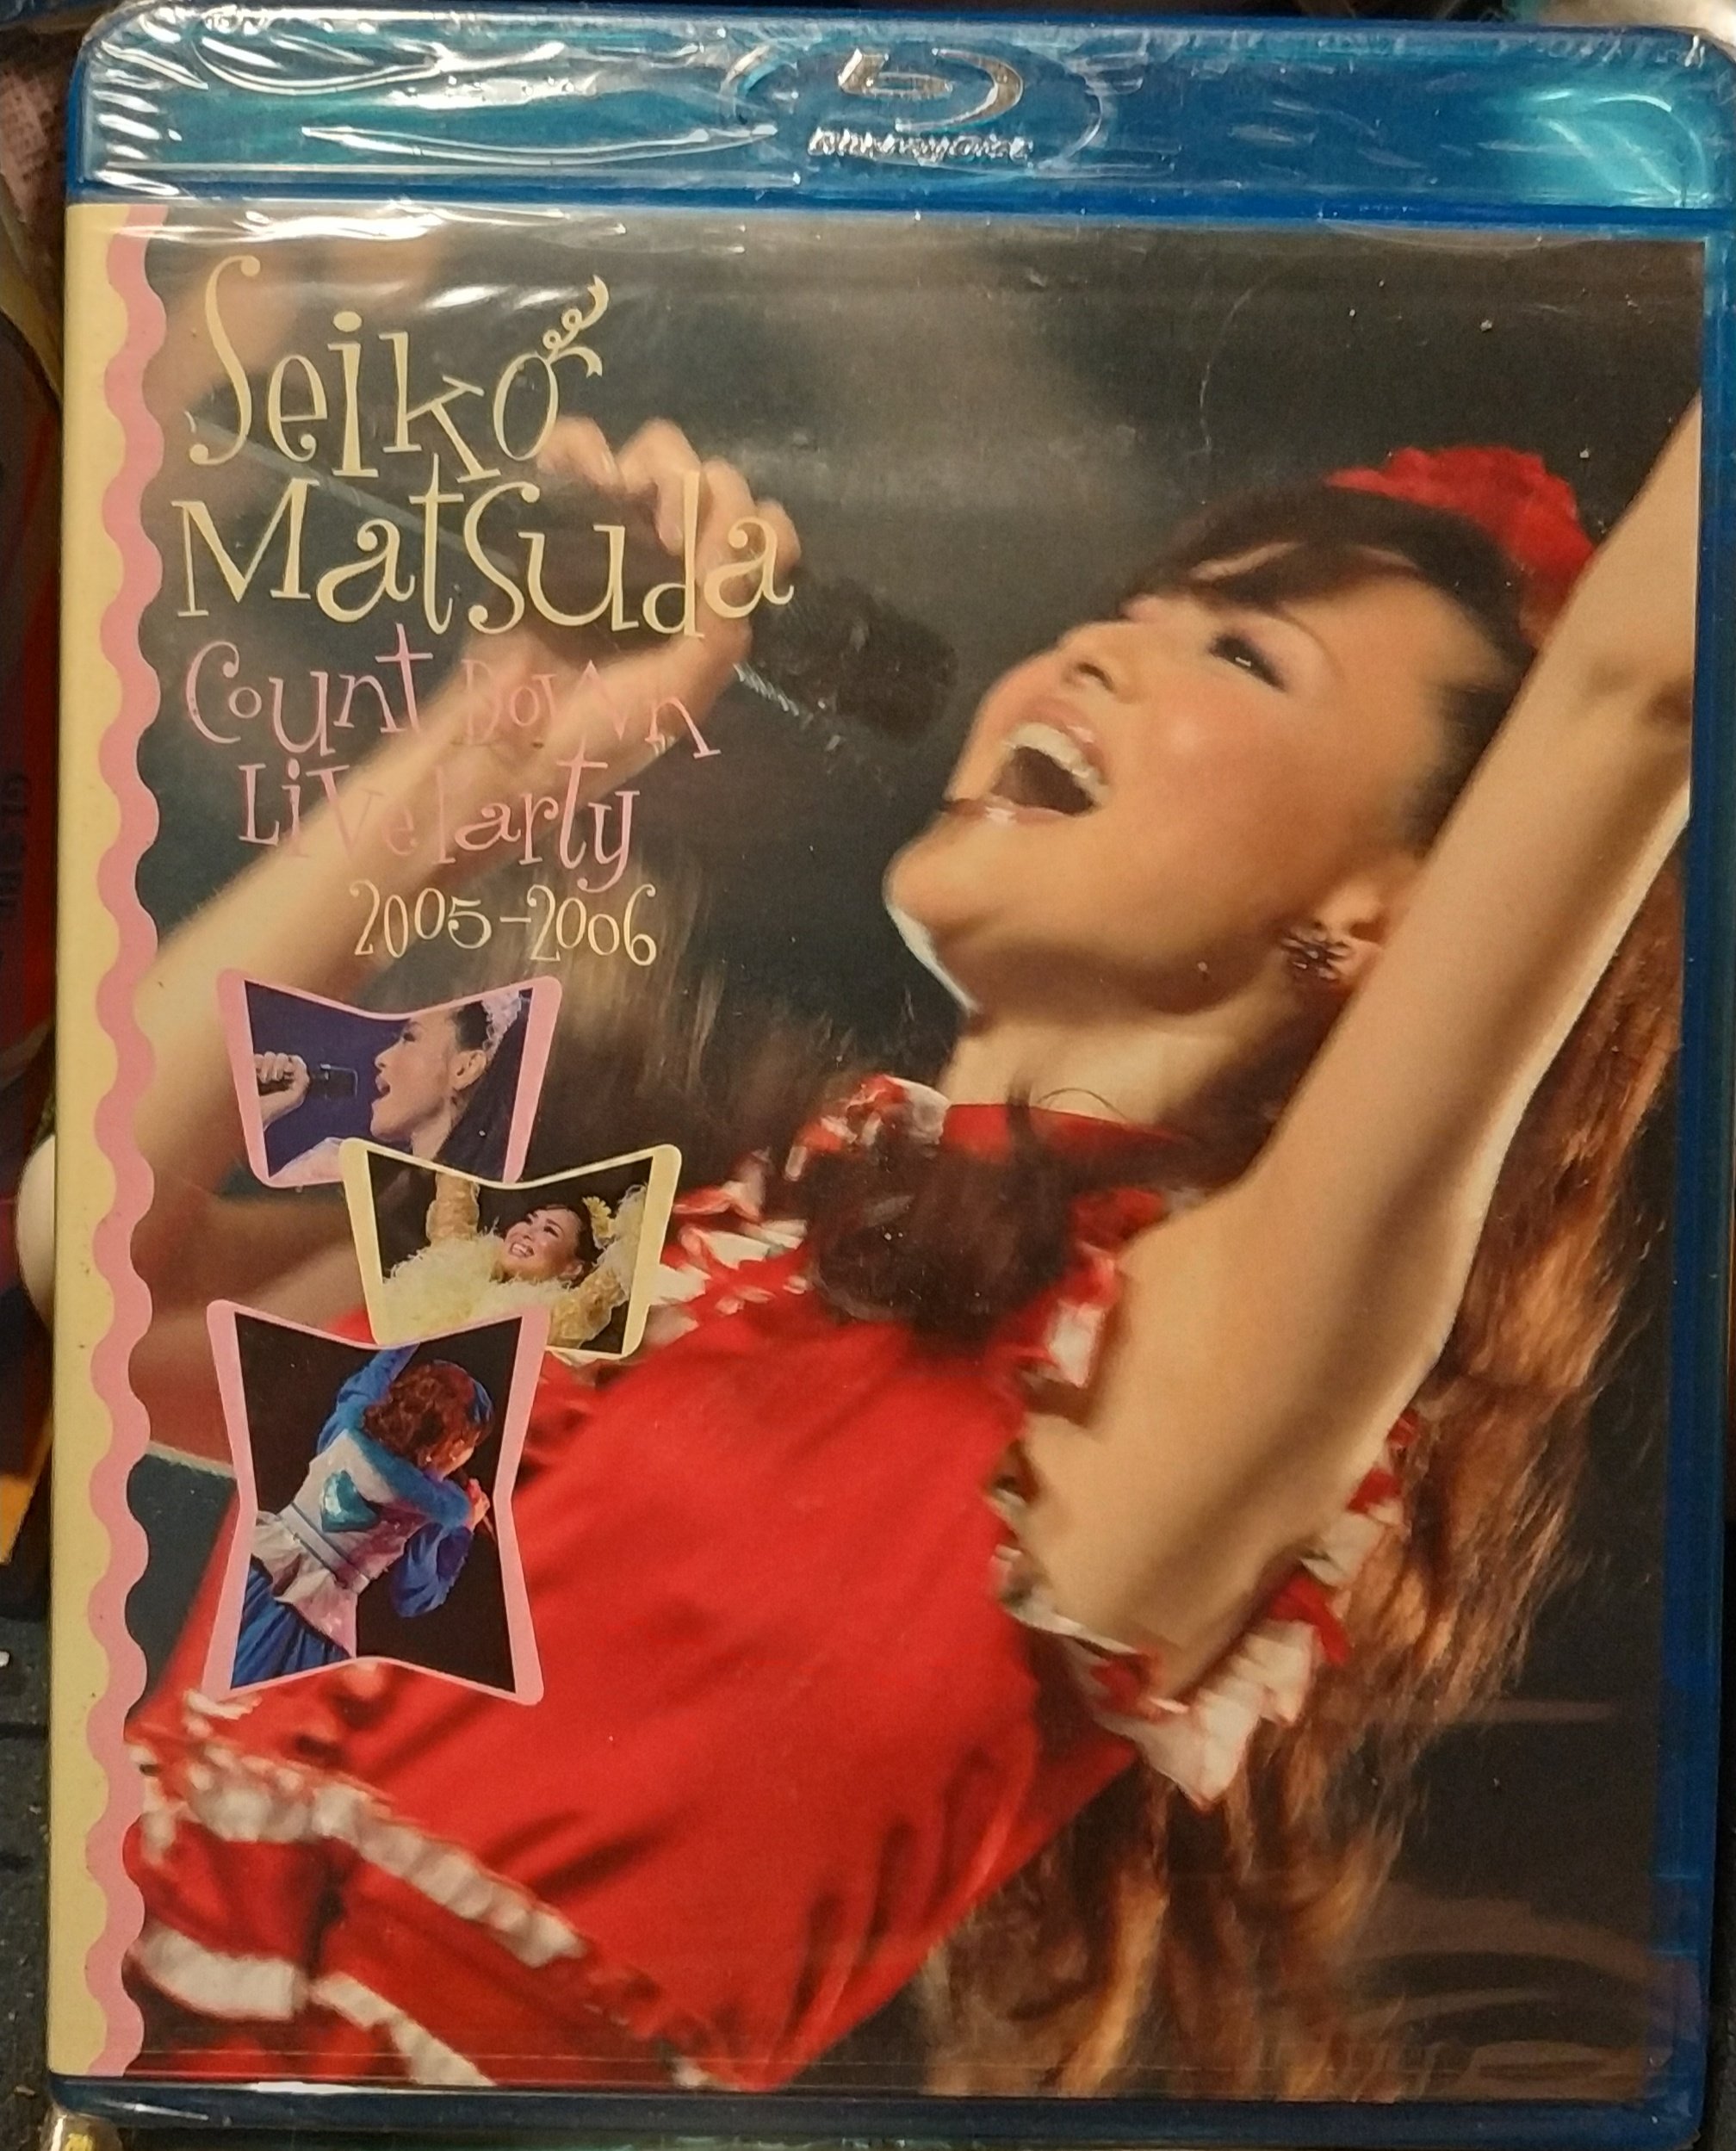 日版全新藍光- 松田聖子SEIKO MATSUDA COUNT DOWN LIVE PARTY 2005 